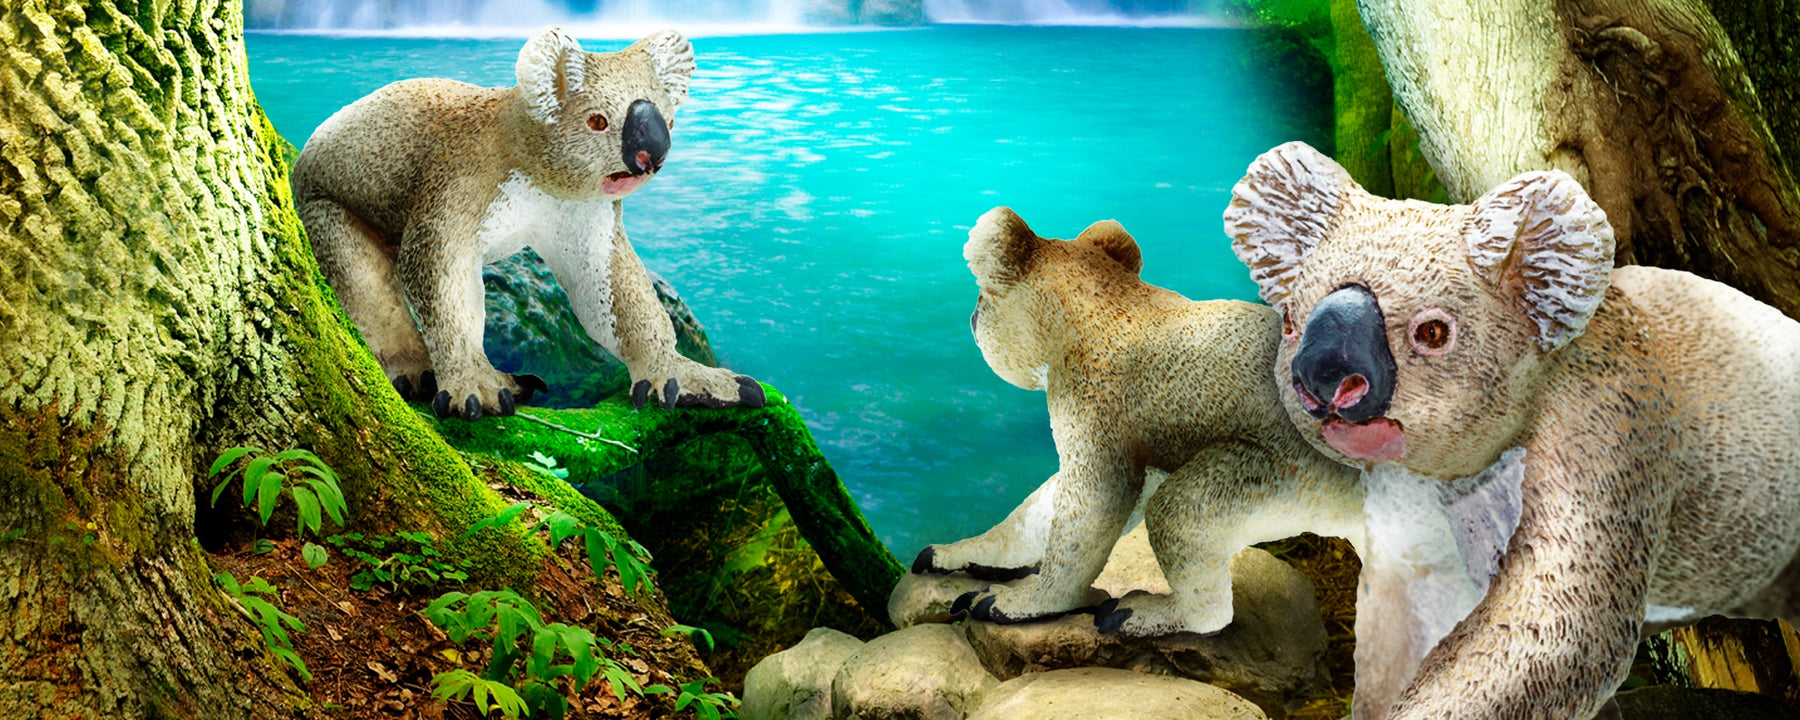 Get Wild & Crazy for Wild Koala Day! - Safari Ltd®